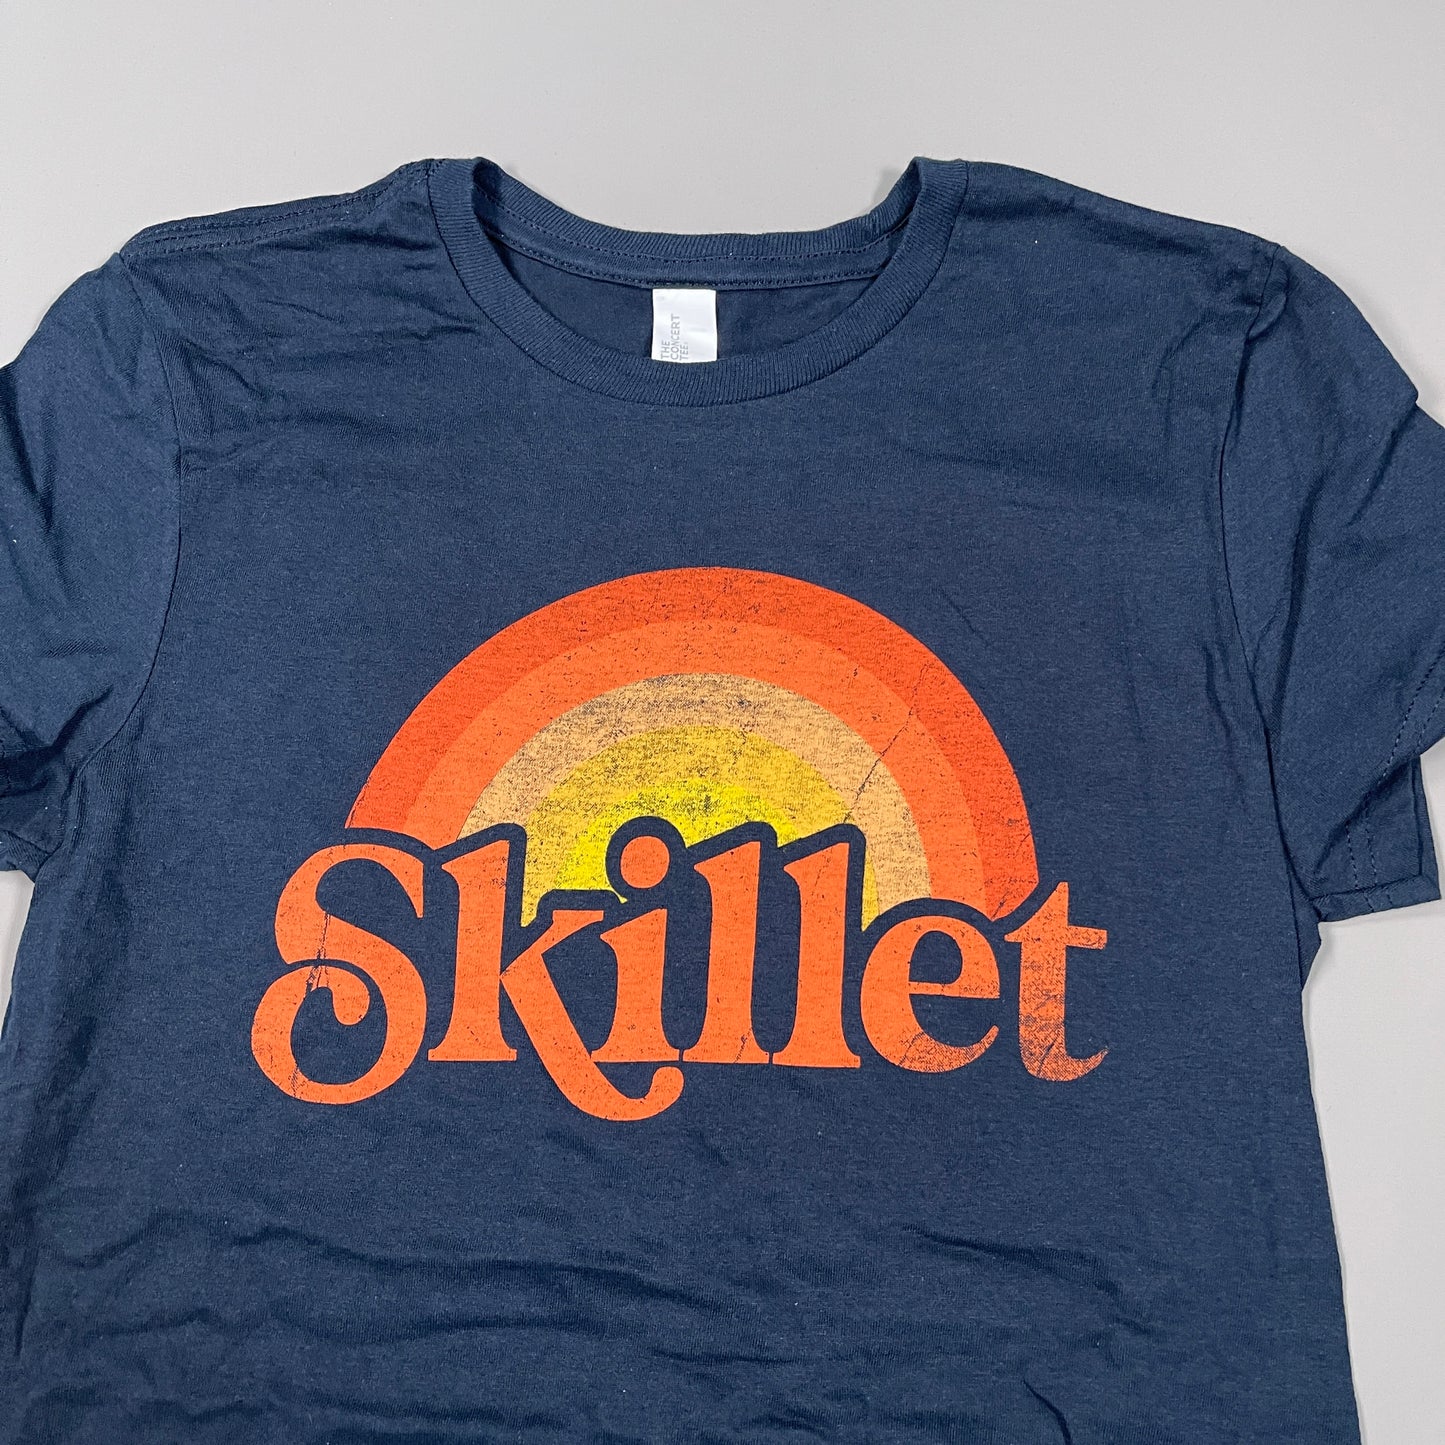 SKILLET Band Tee Shirt T-Shirt Youth Sz S Blue/Orange (New)